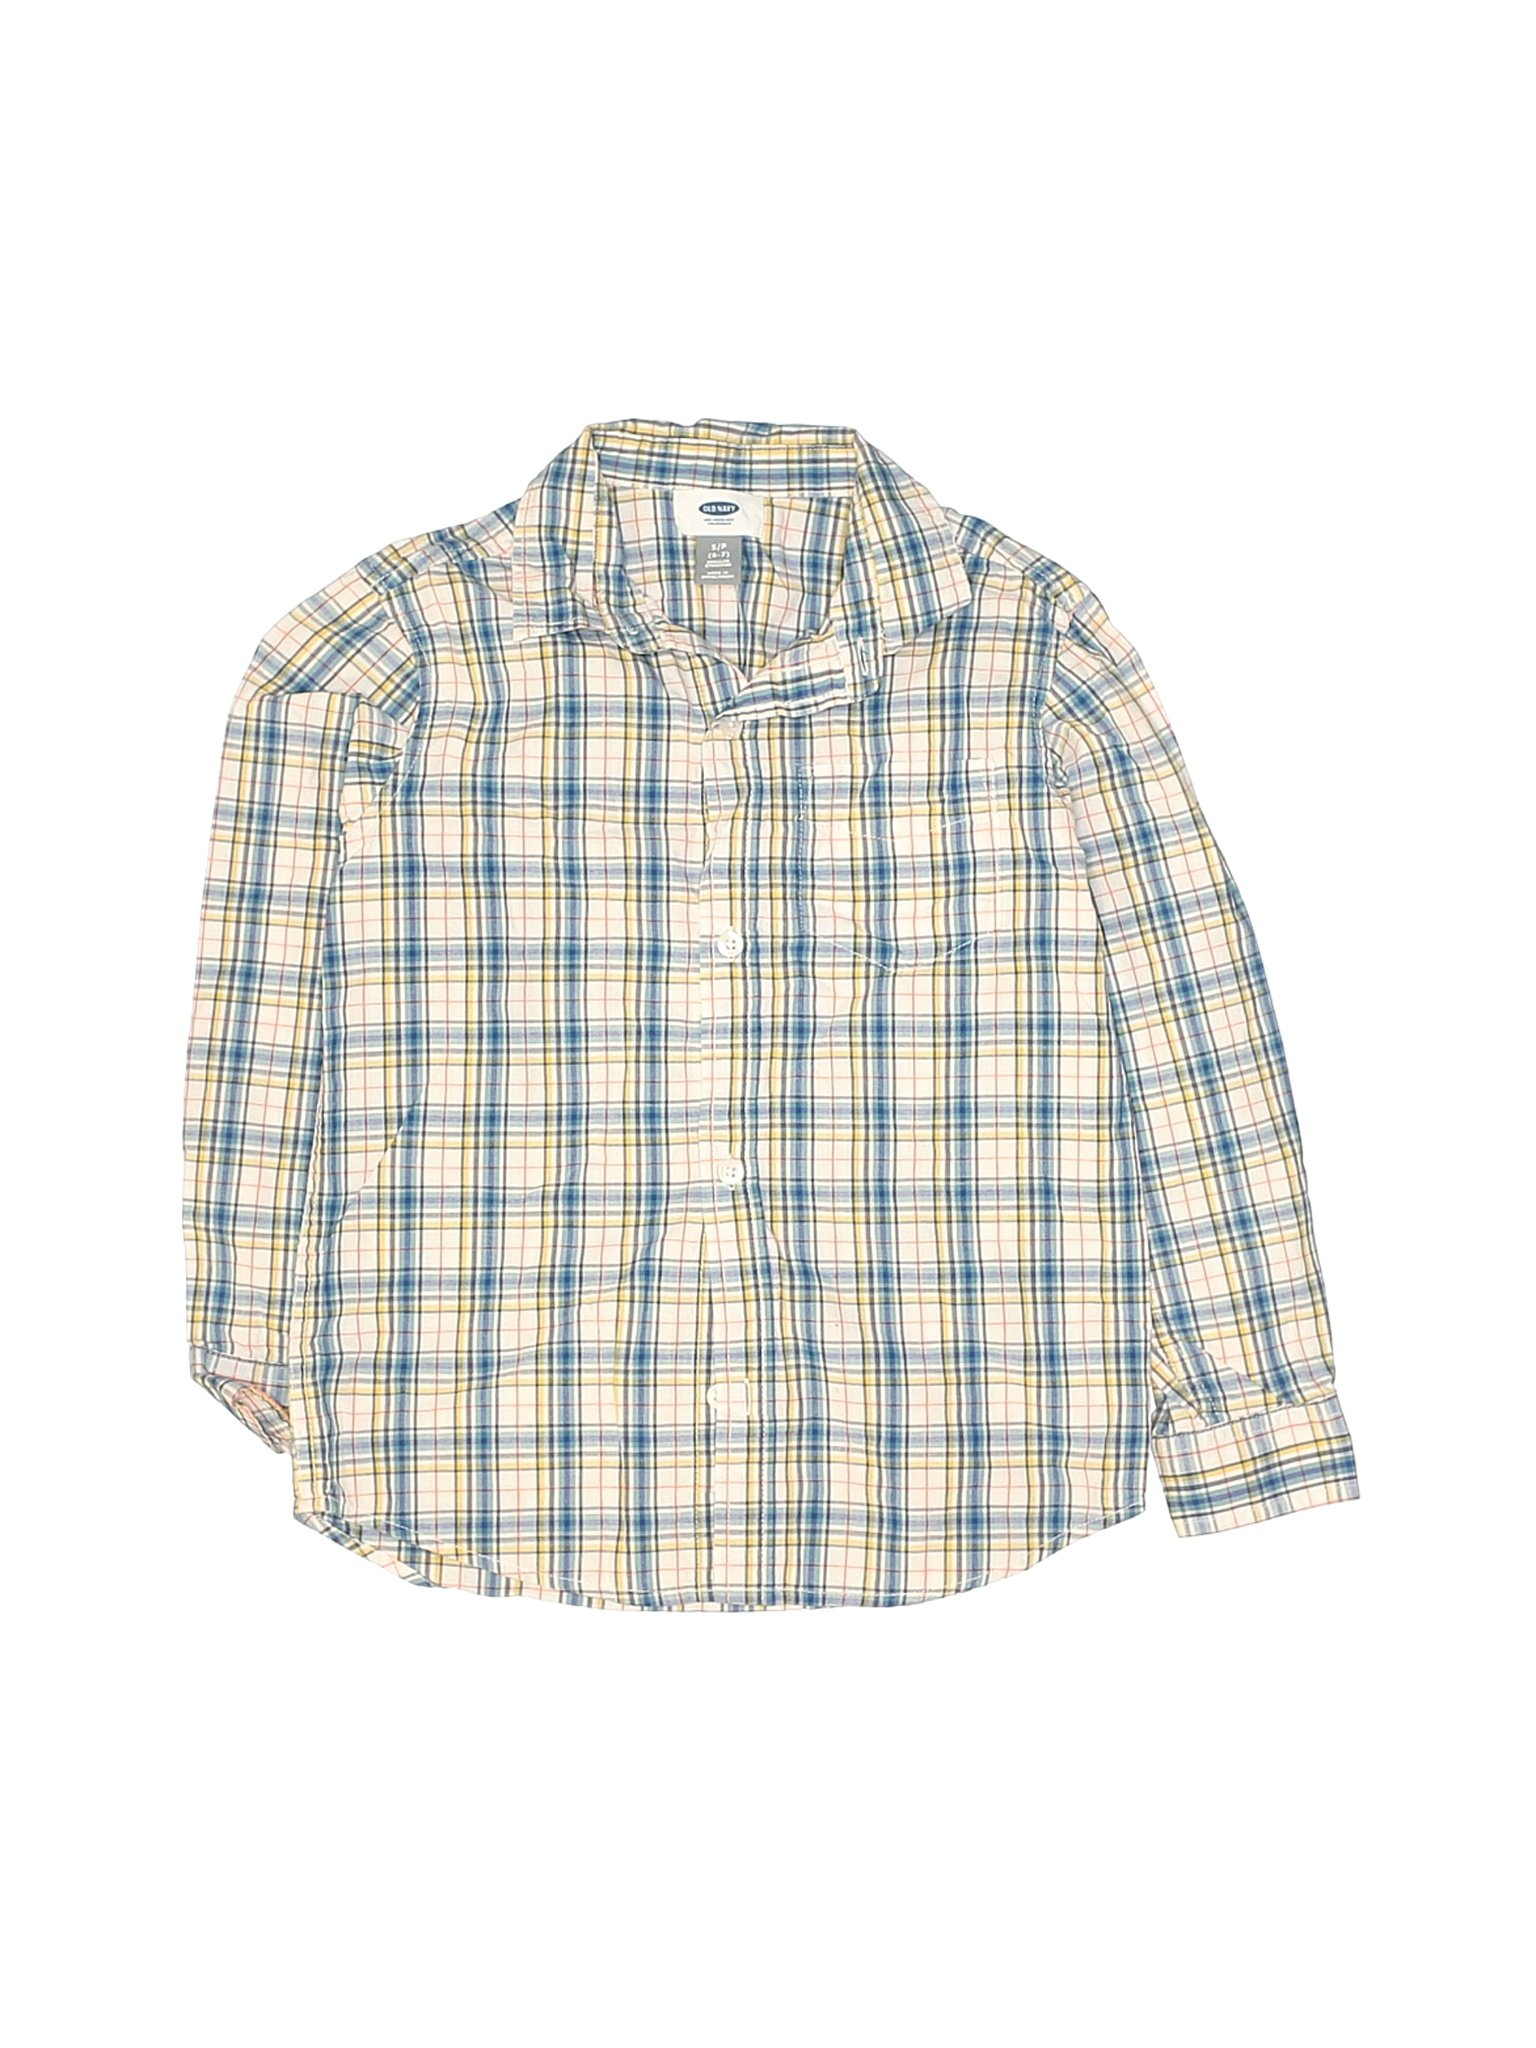 Old Navy Boys Blue Long Sleeve Button-Down Shirt 6 | eBay